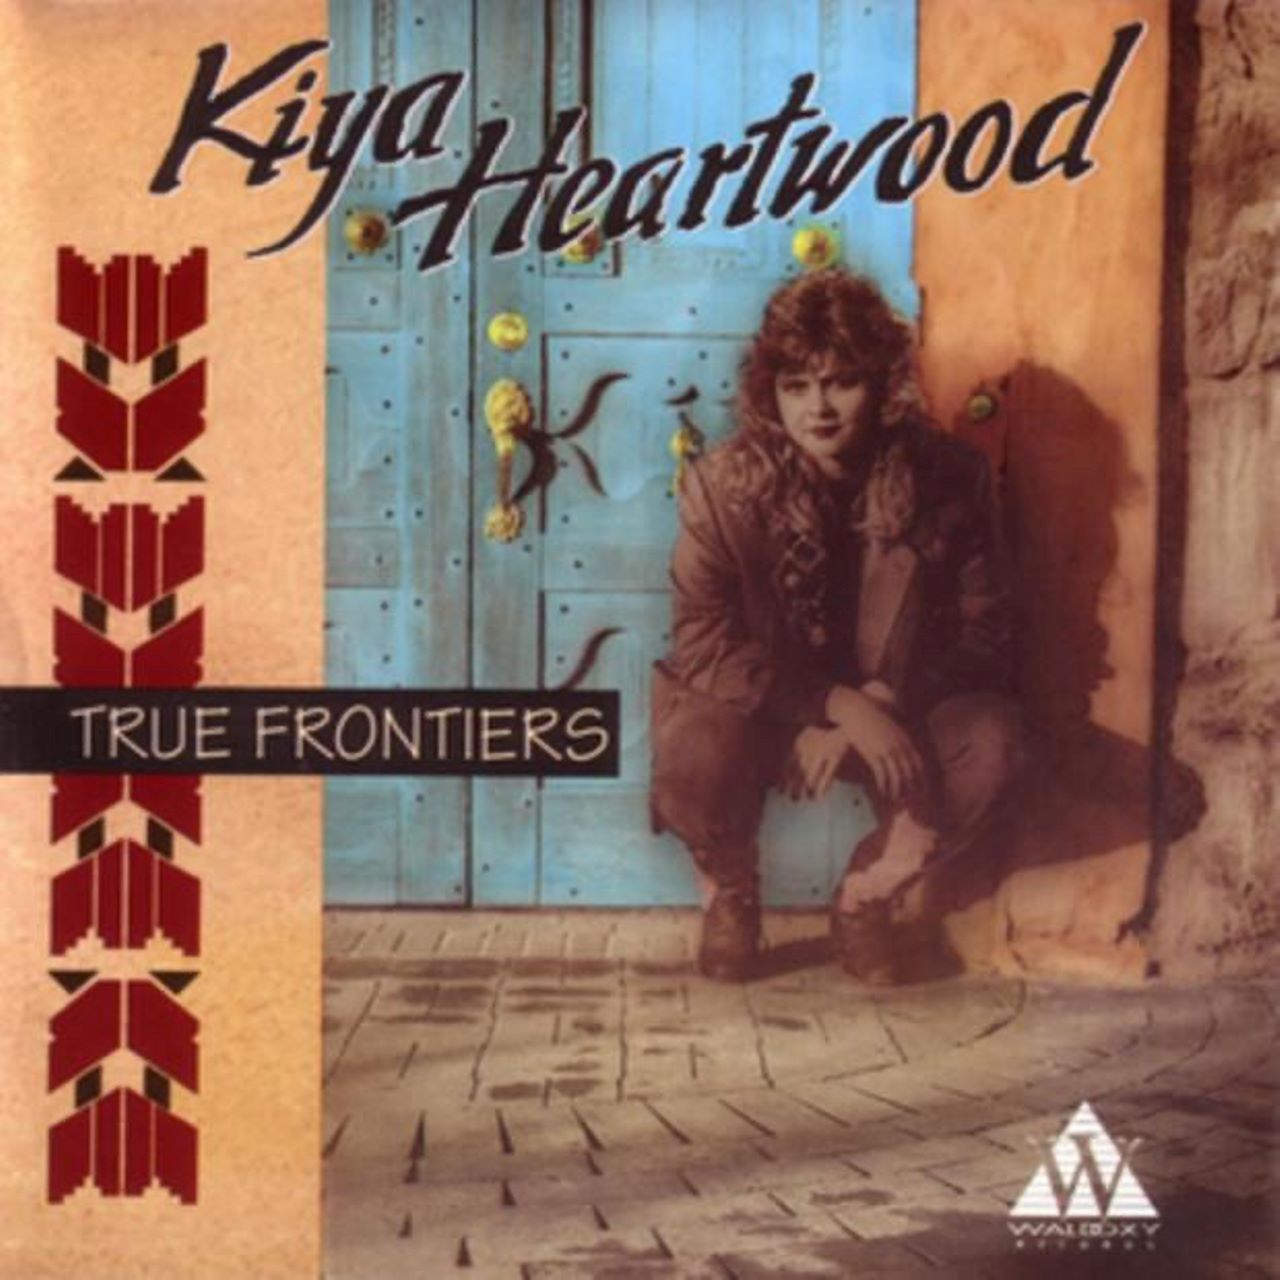 Kiya Heartwood - True Frontiers cover album